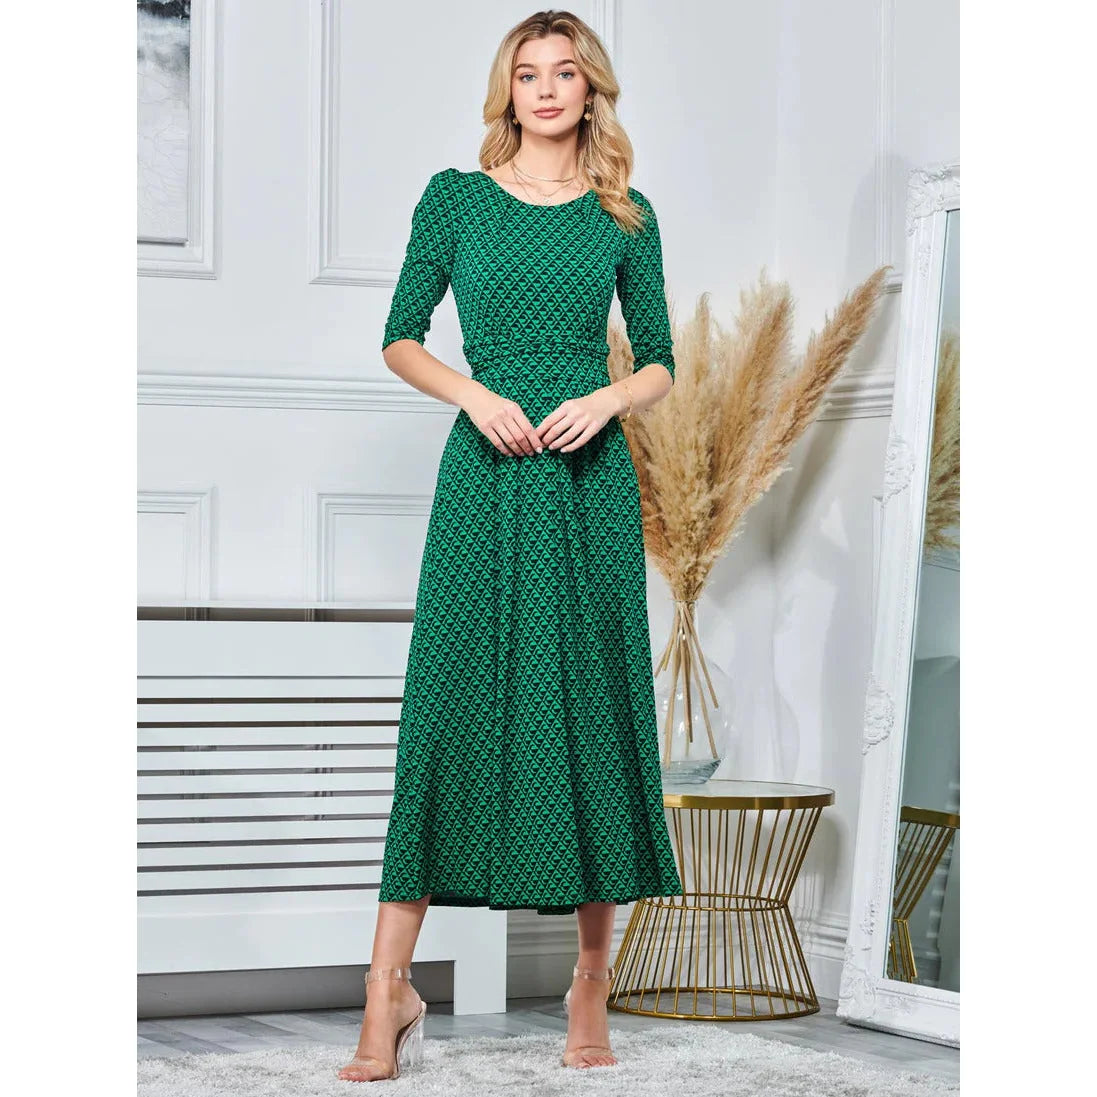 Jolie Moi Vintage Round Neck Jersey Green Multi Geometric Print Maxi Dress